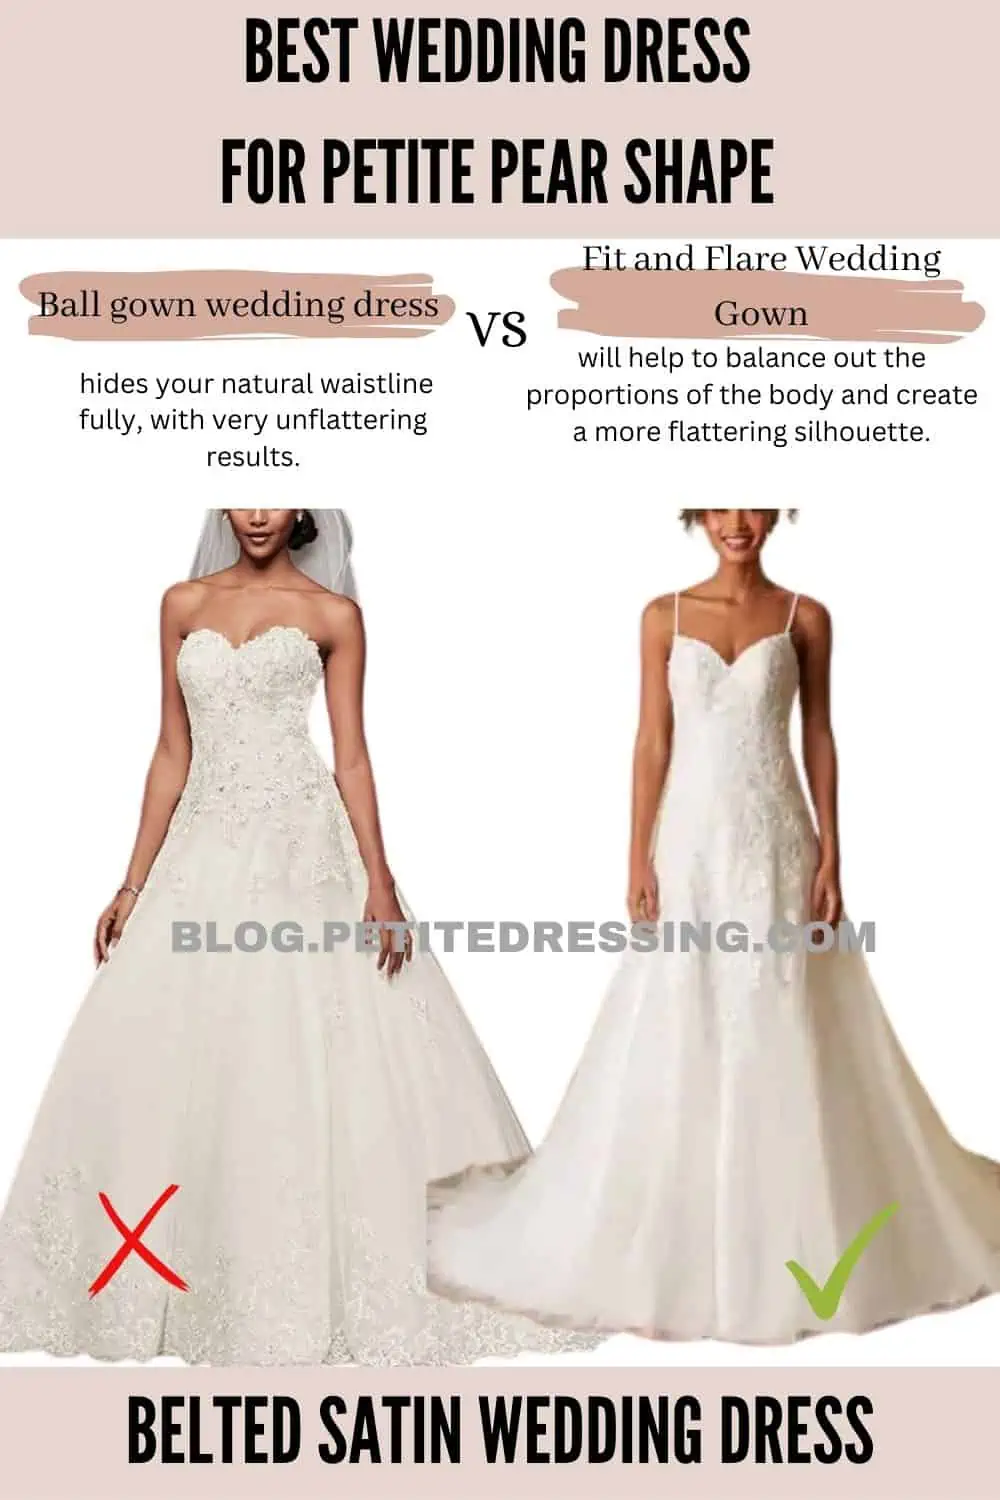 Wedding Dress Guide for the Petite Pear Shape - Petite Dressing